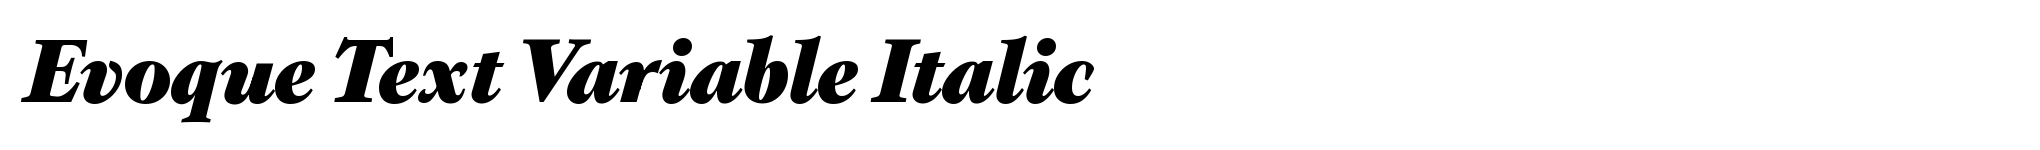 Evoque Text Variable Italic image